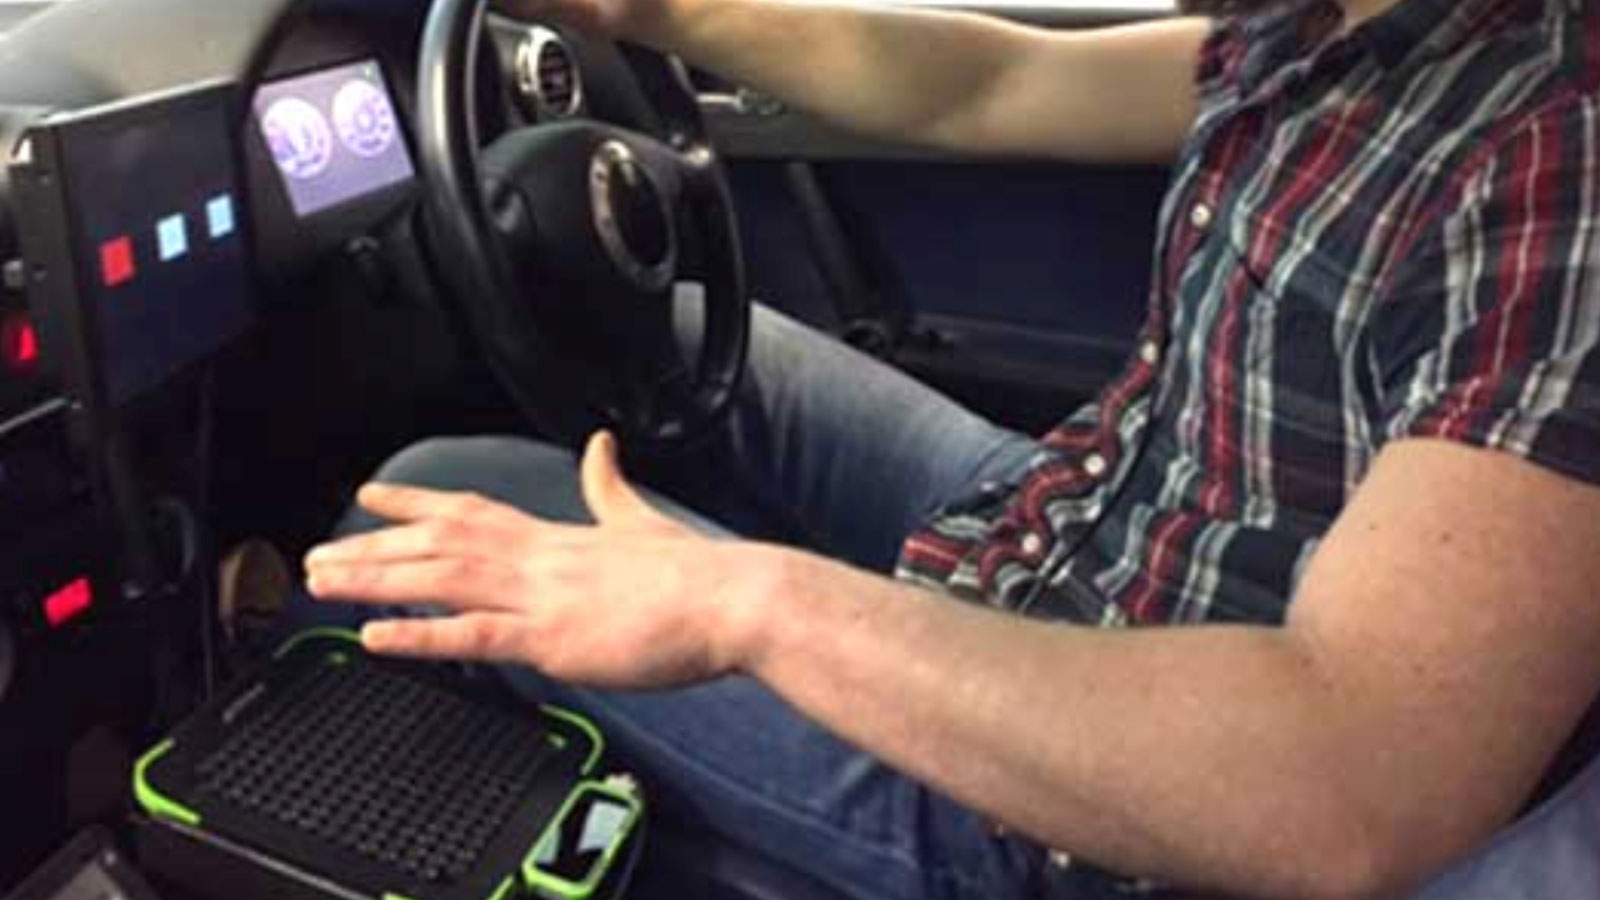 Ultraleap haptics array in a car